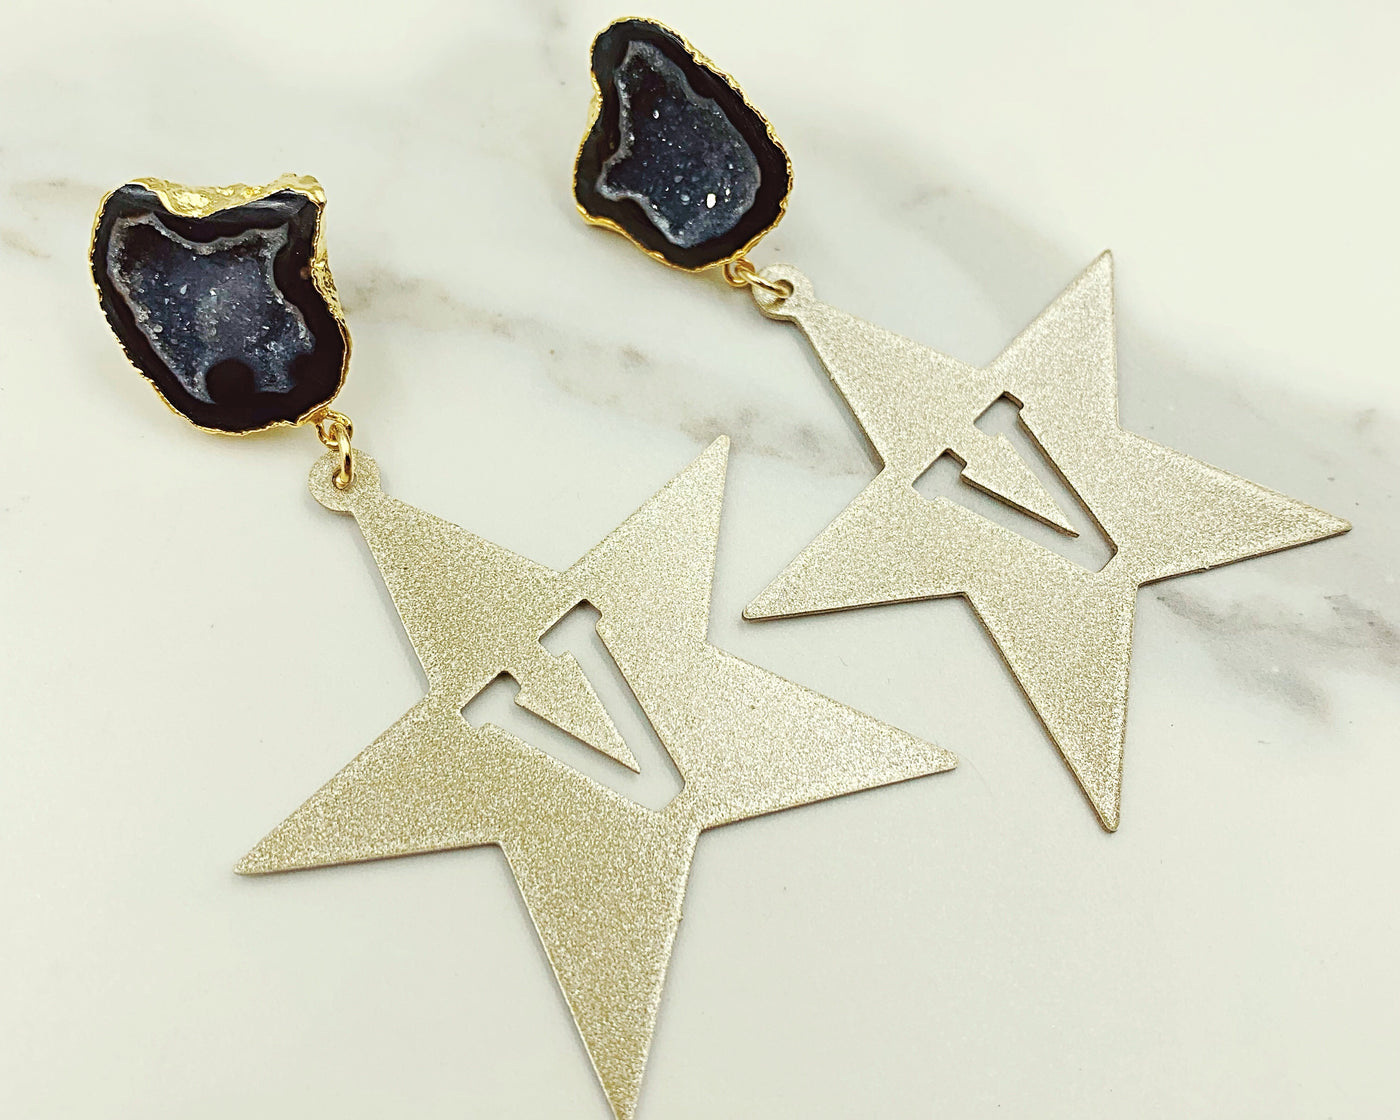 Vanderbilt Gold Tone Star Earrings with Black Geode